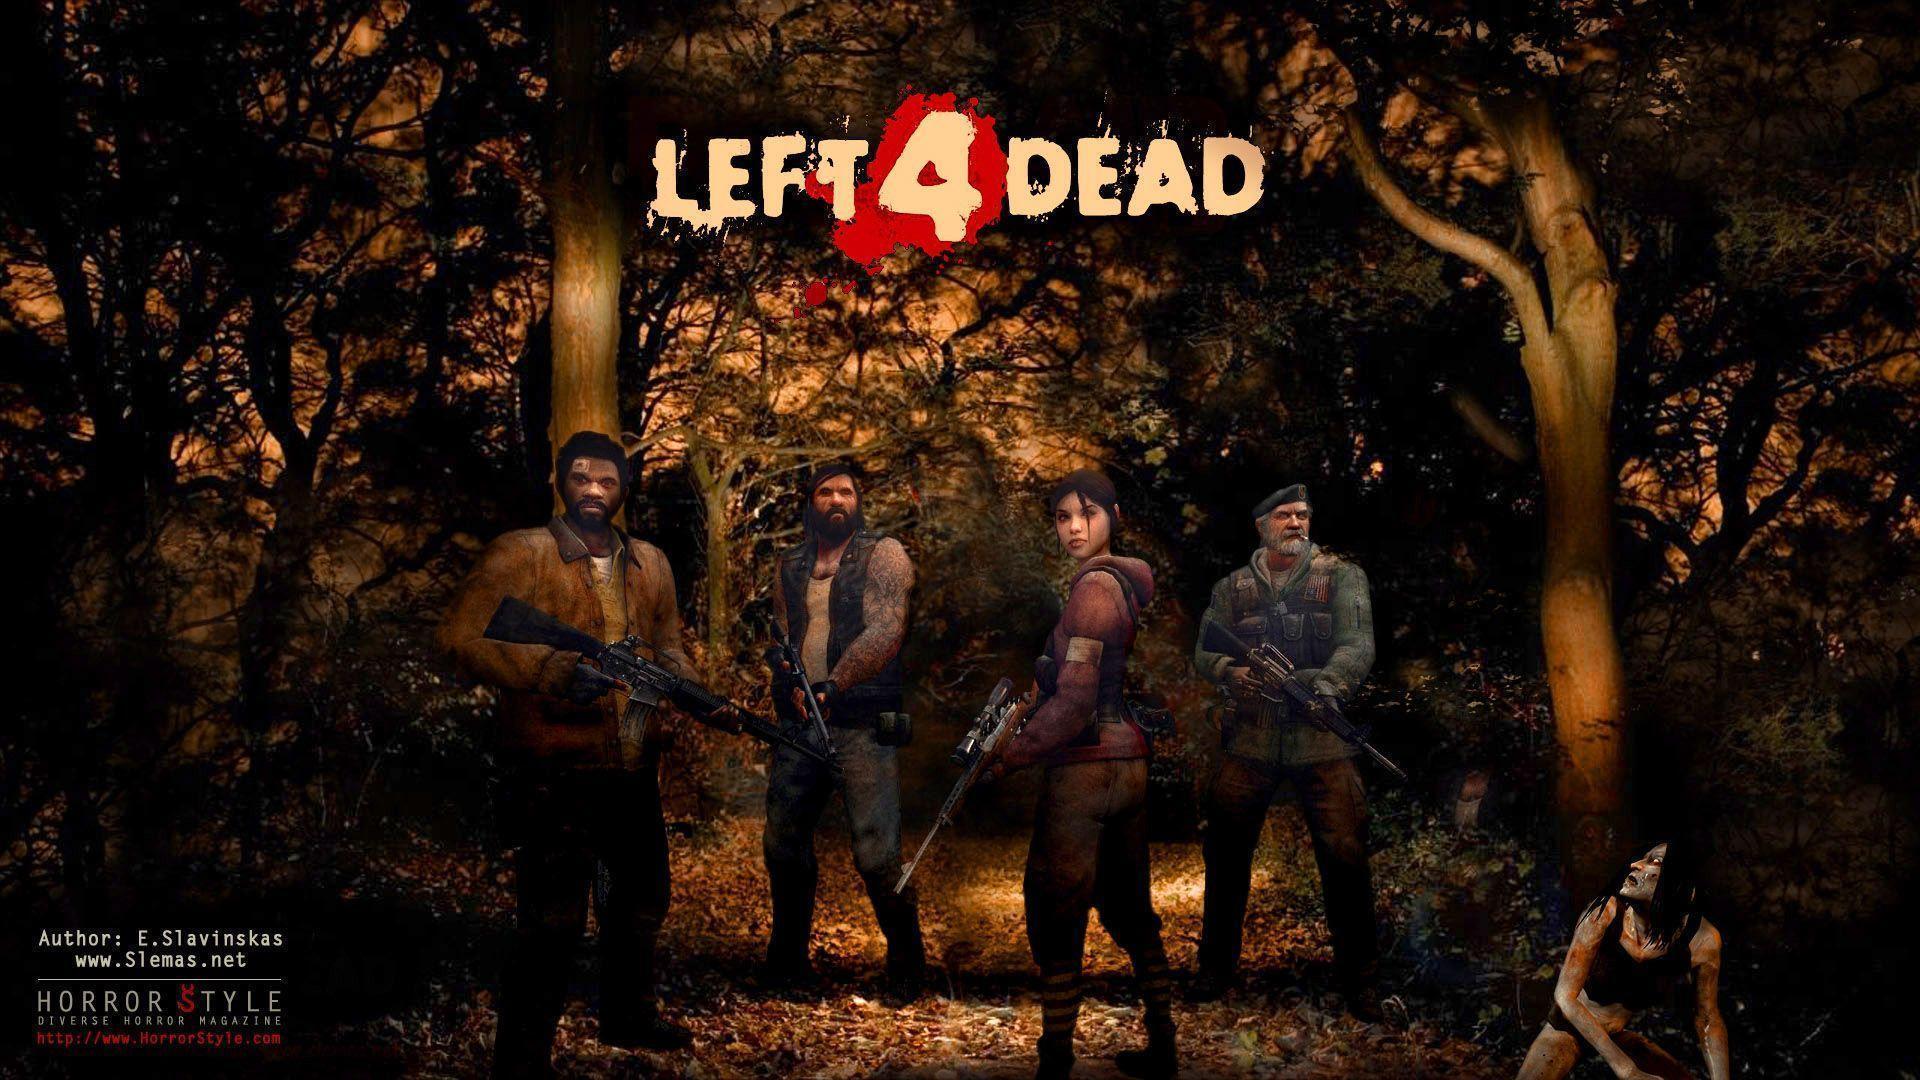 Download Left 4 Dead 2 Zombie Wallpaper High Resolution HD Video